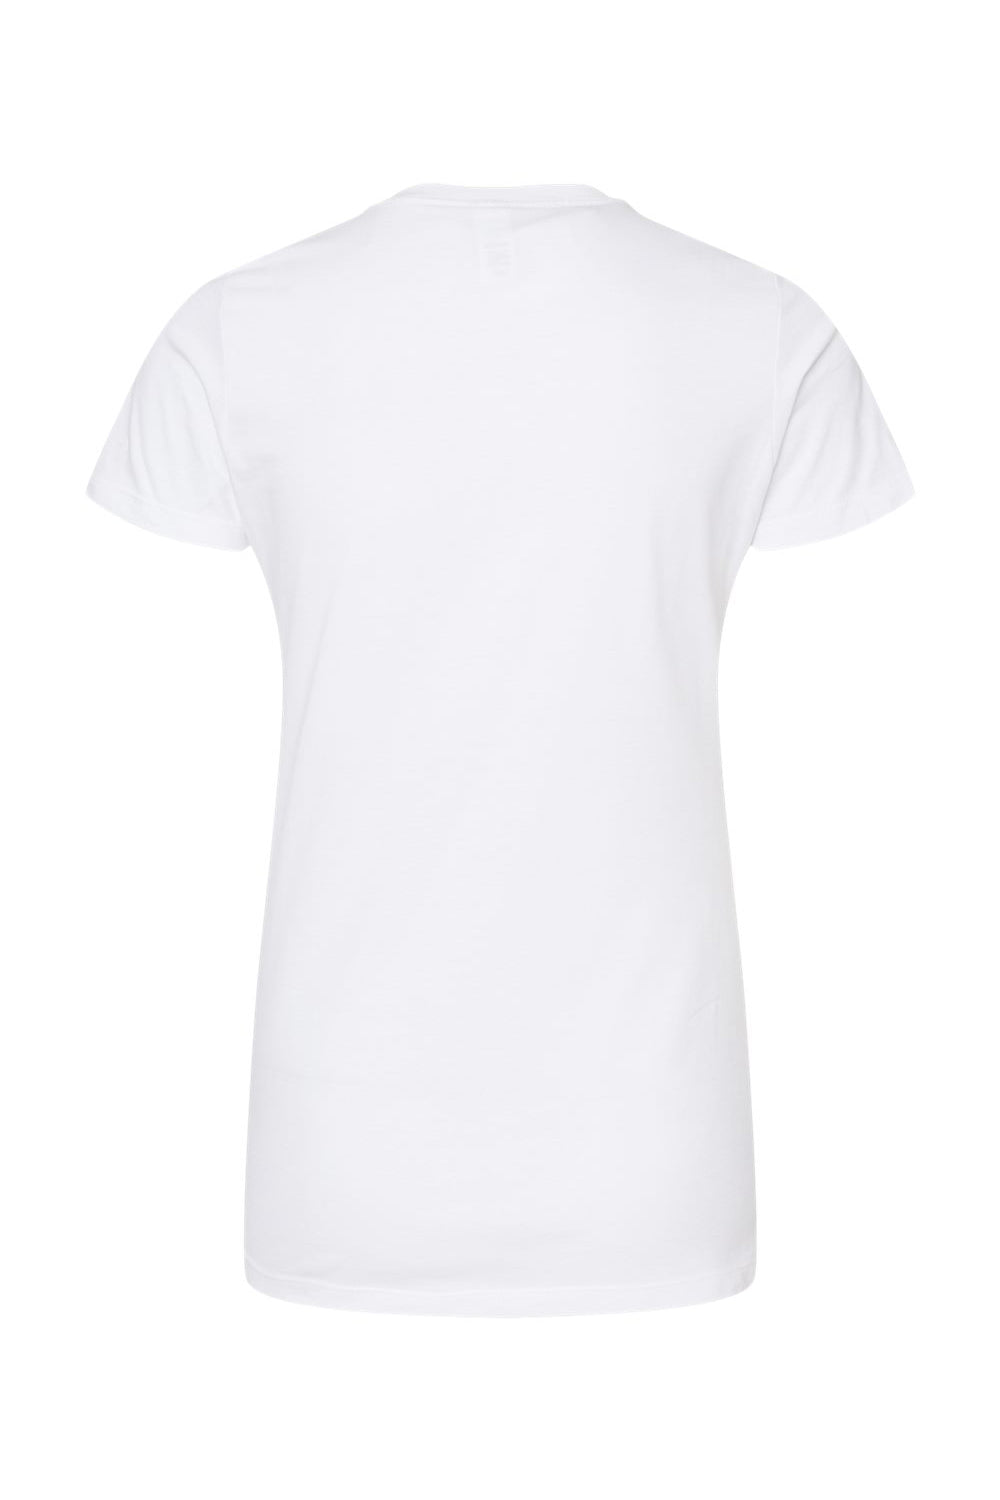 Tultex 516 Womens Premium Short Sleeve Crewneck T-Shirt White Flat Back